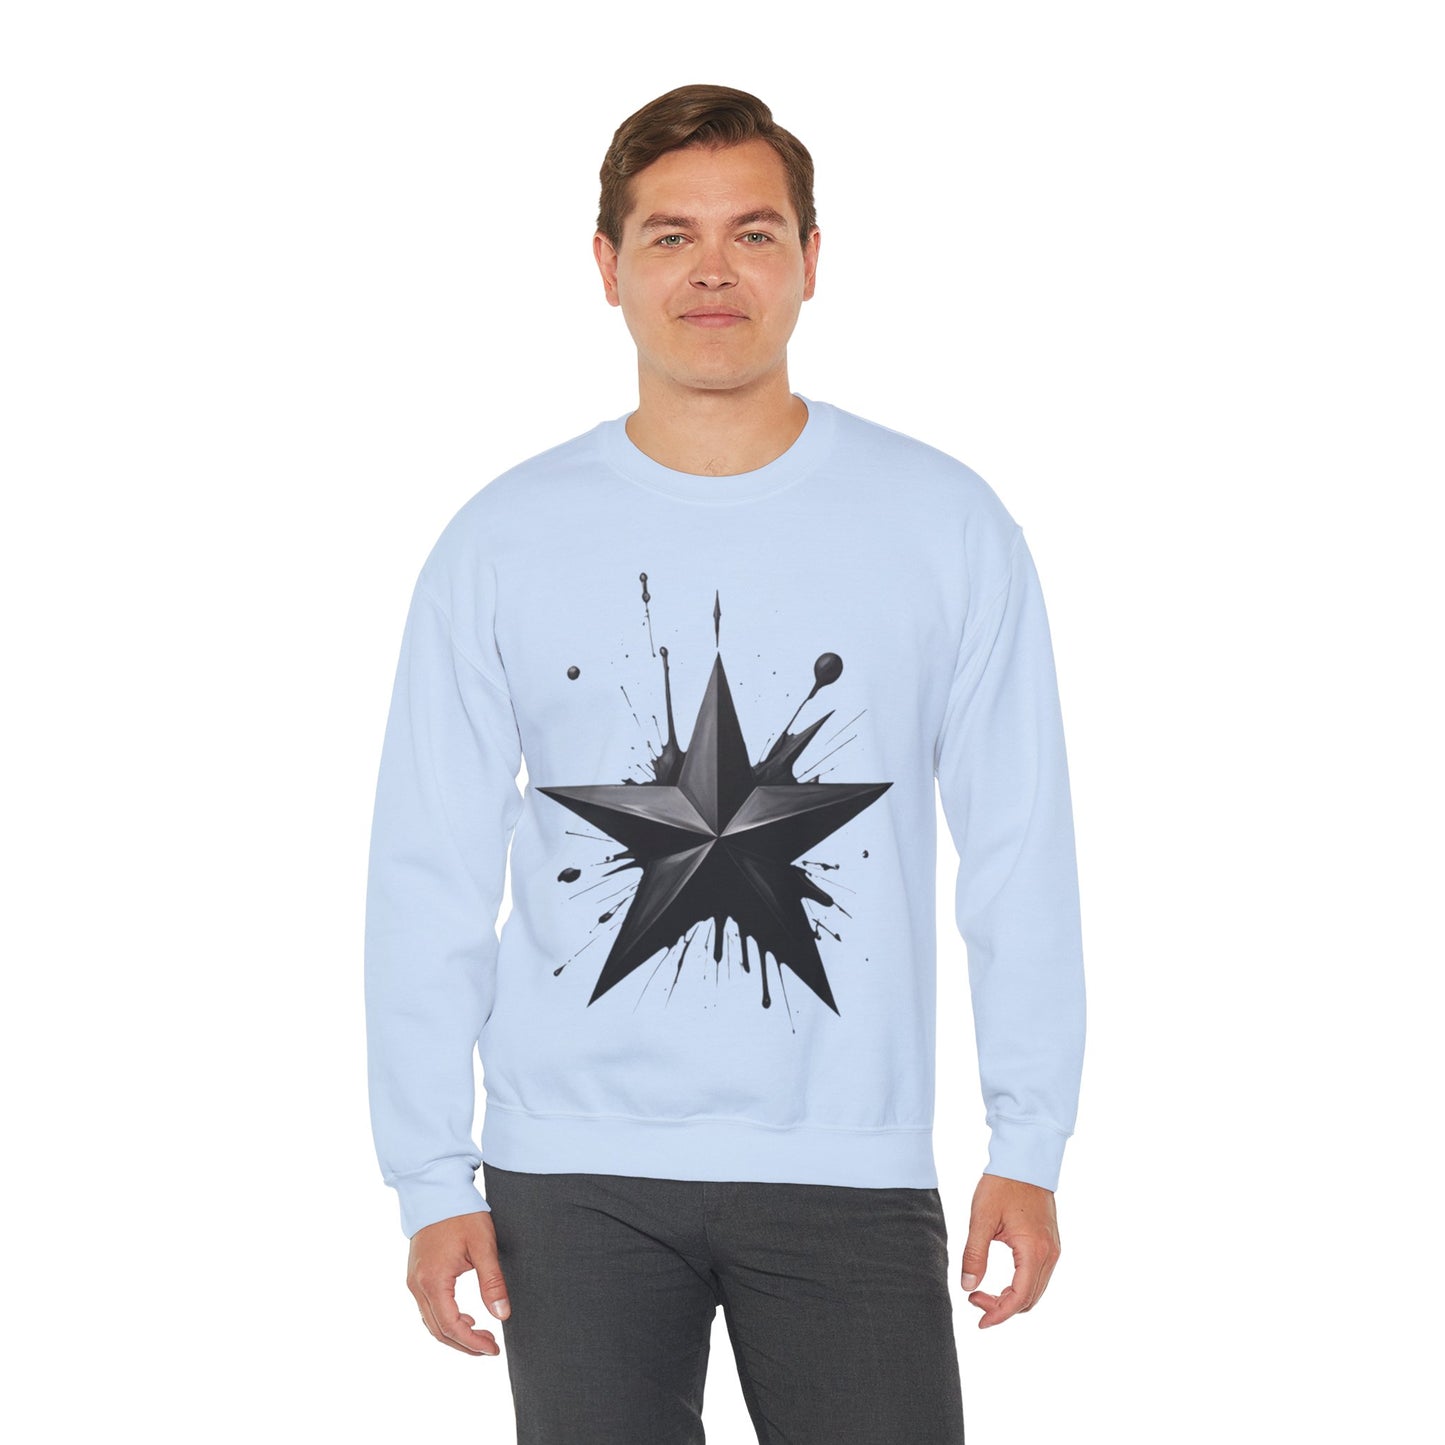 Black Star - Unisex Crewneck Sweatshirt